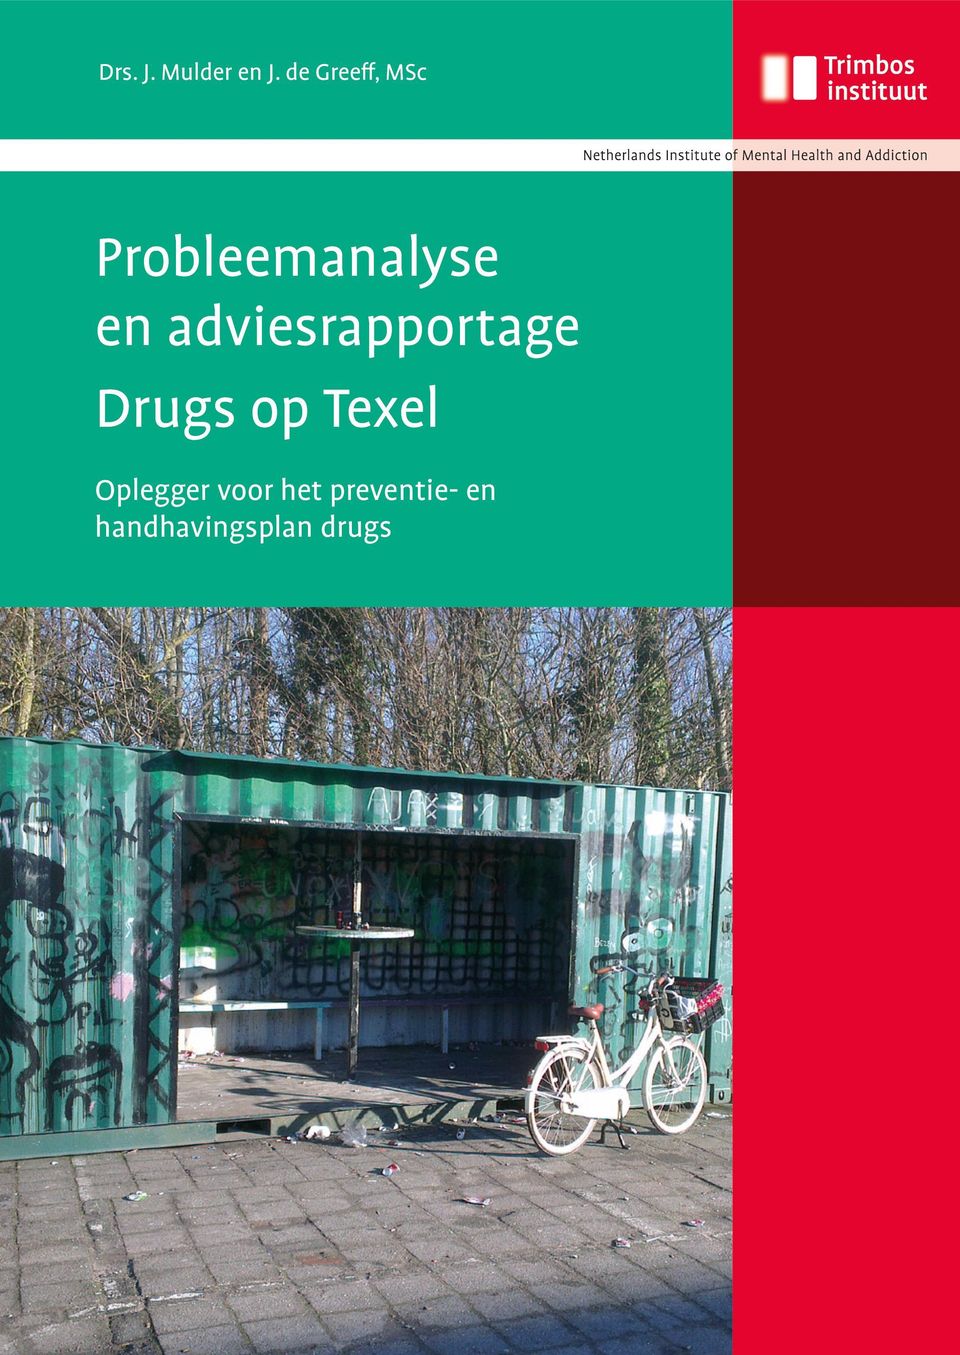 adviesrapportage Drugs op Texel